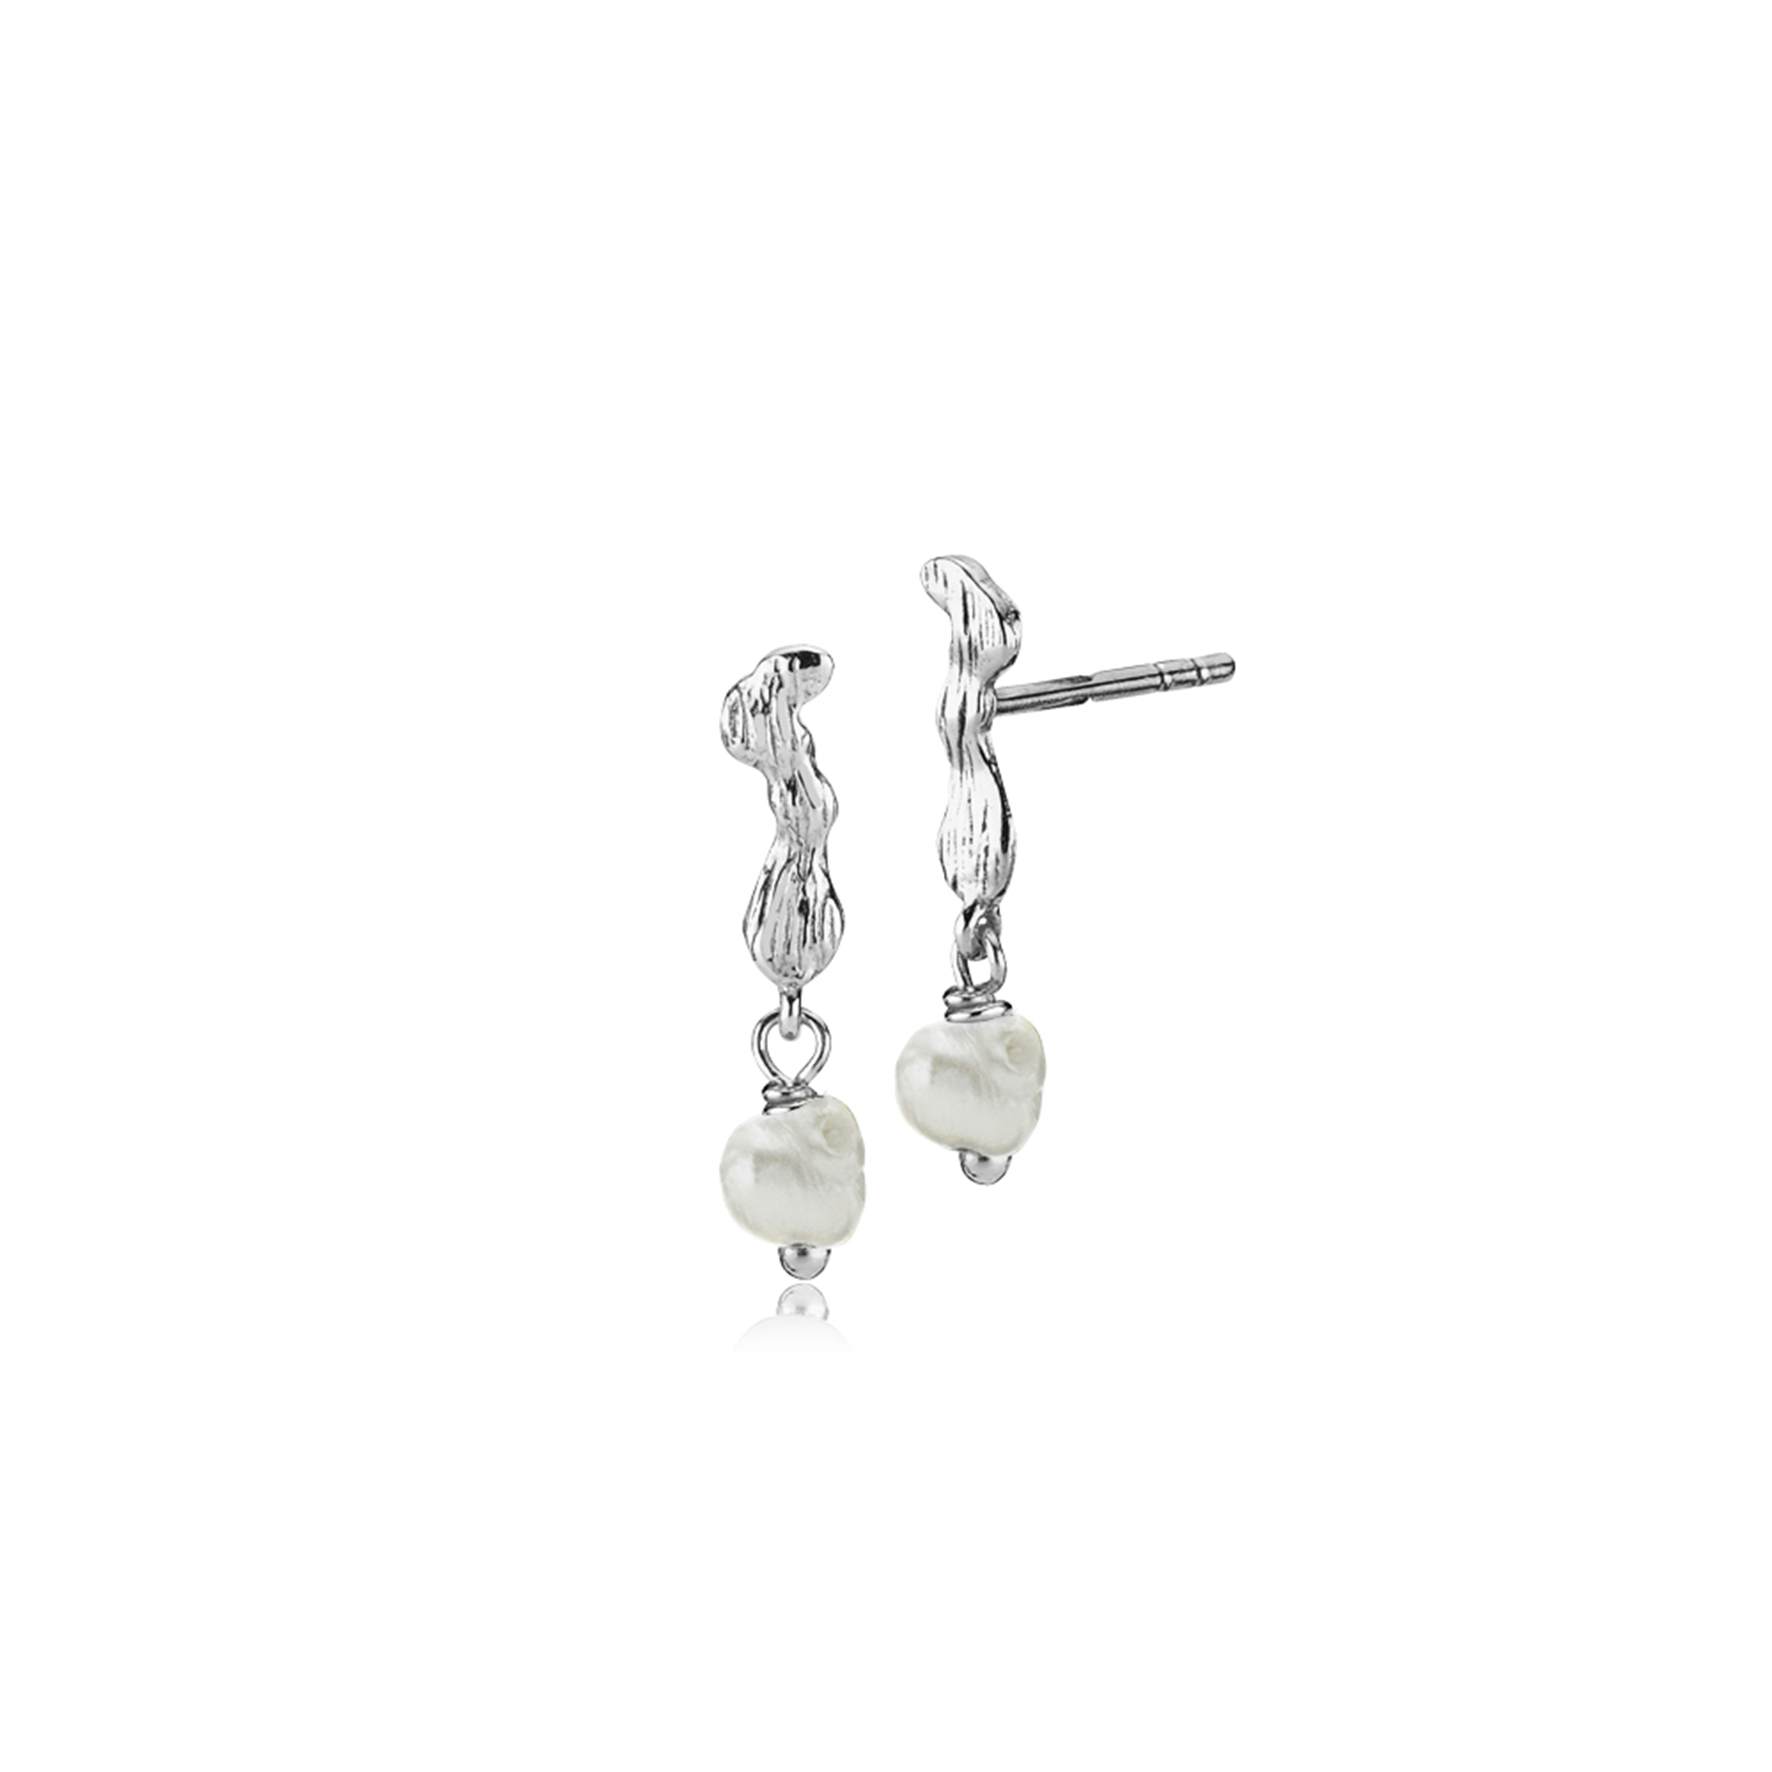 Lærke Bentsen By Sistie Earsticks Whit Pearls från Sistie i Silver Sterling 925|Freshwater Pearl